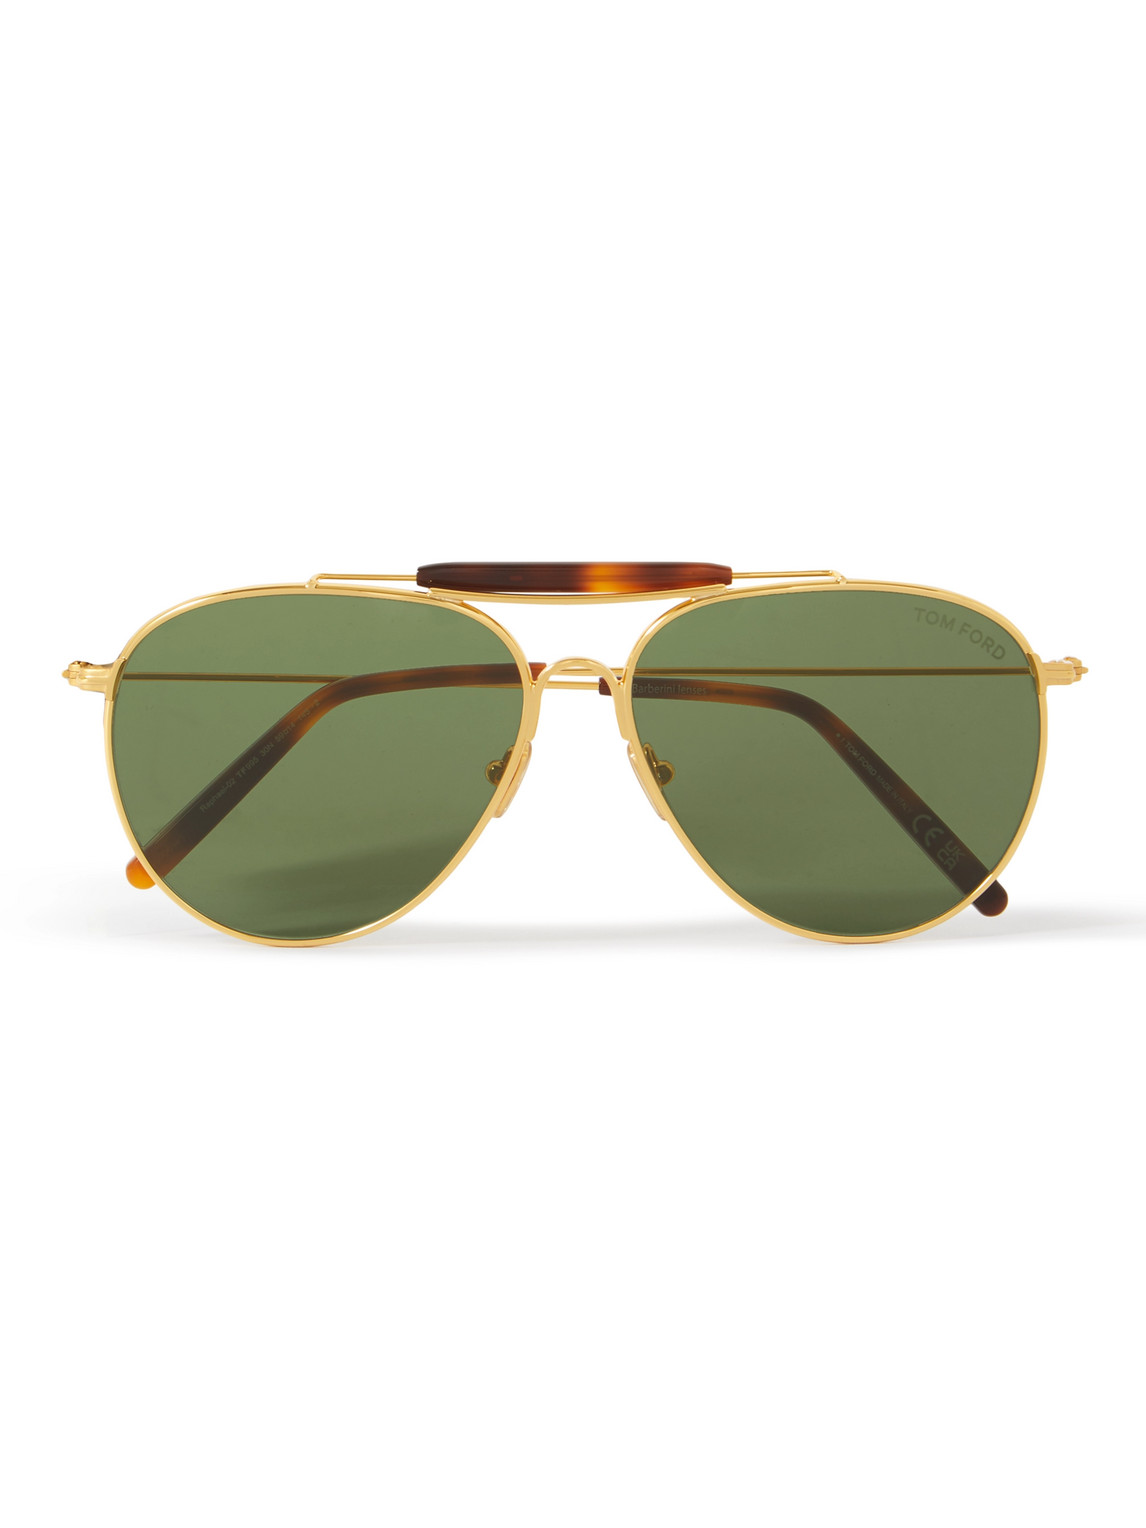 Tom Ford Aviator-style Gold-tone Sunglasses